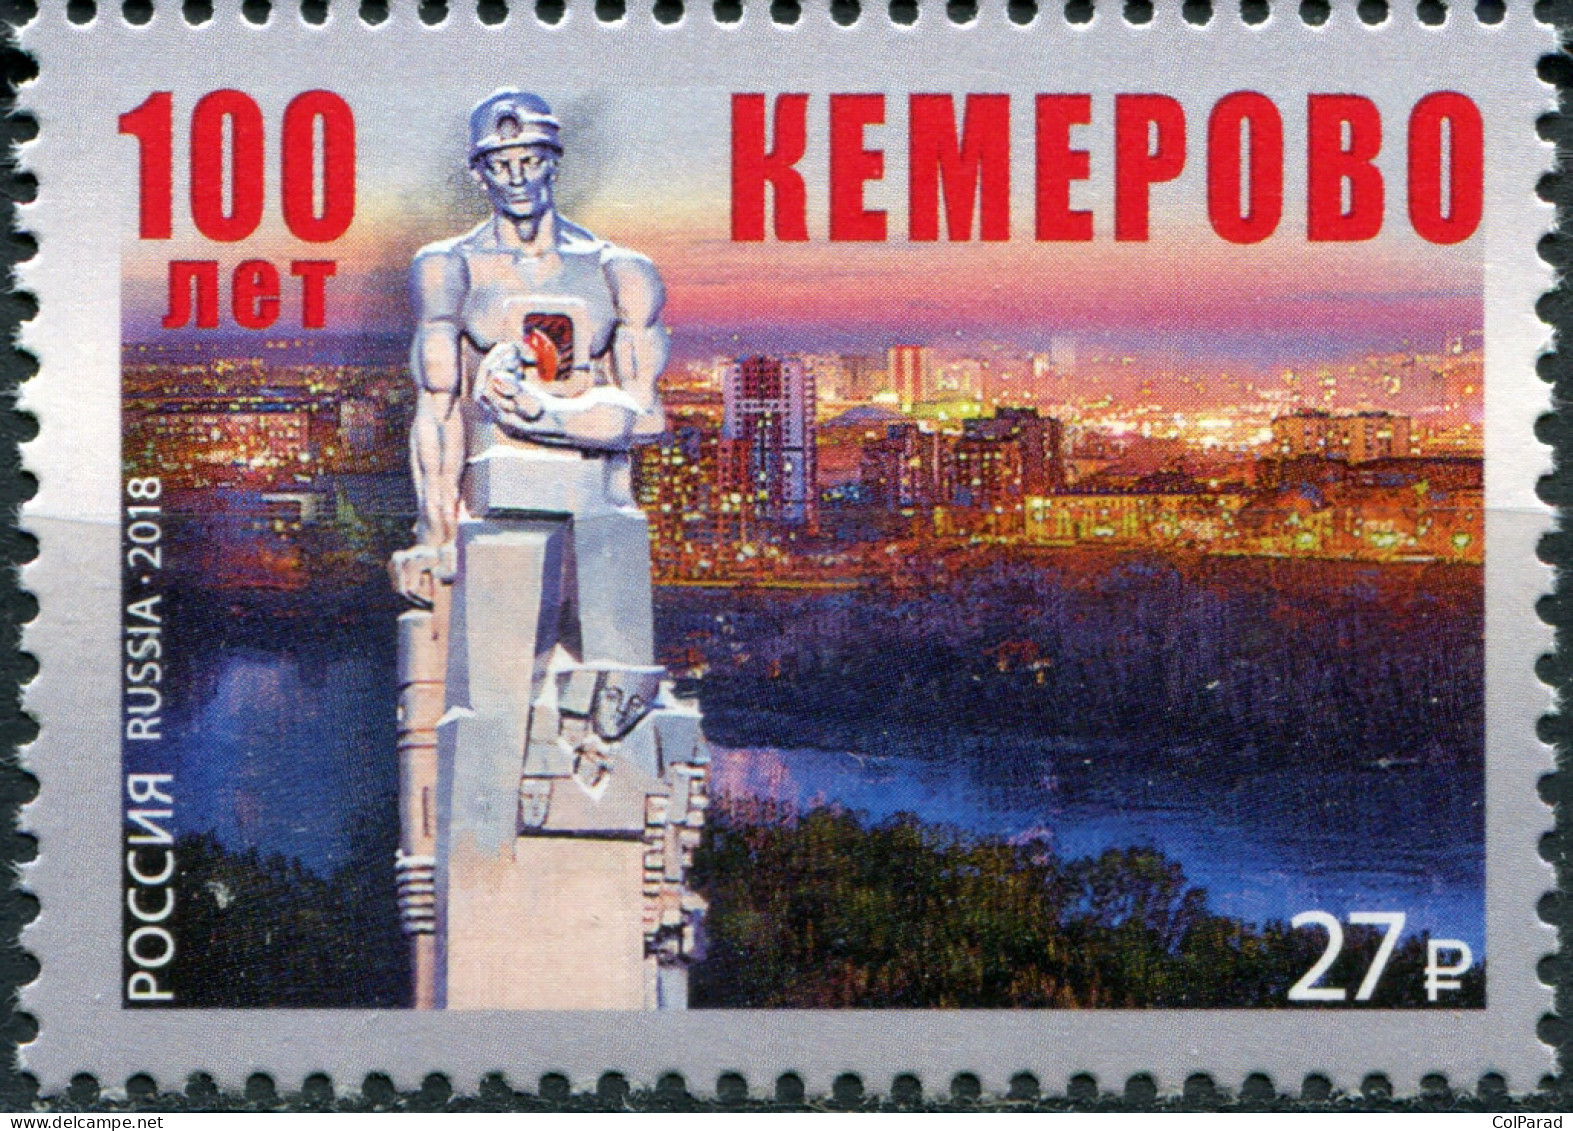 RUSSIA - 2018 -  STAMP MNH ** - Centenary Of City Of Kemerovo - Ungebraucht